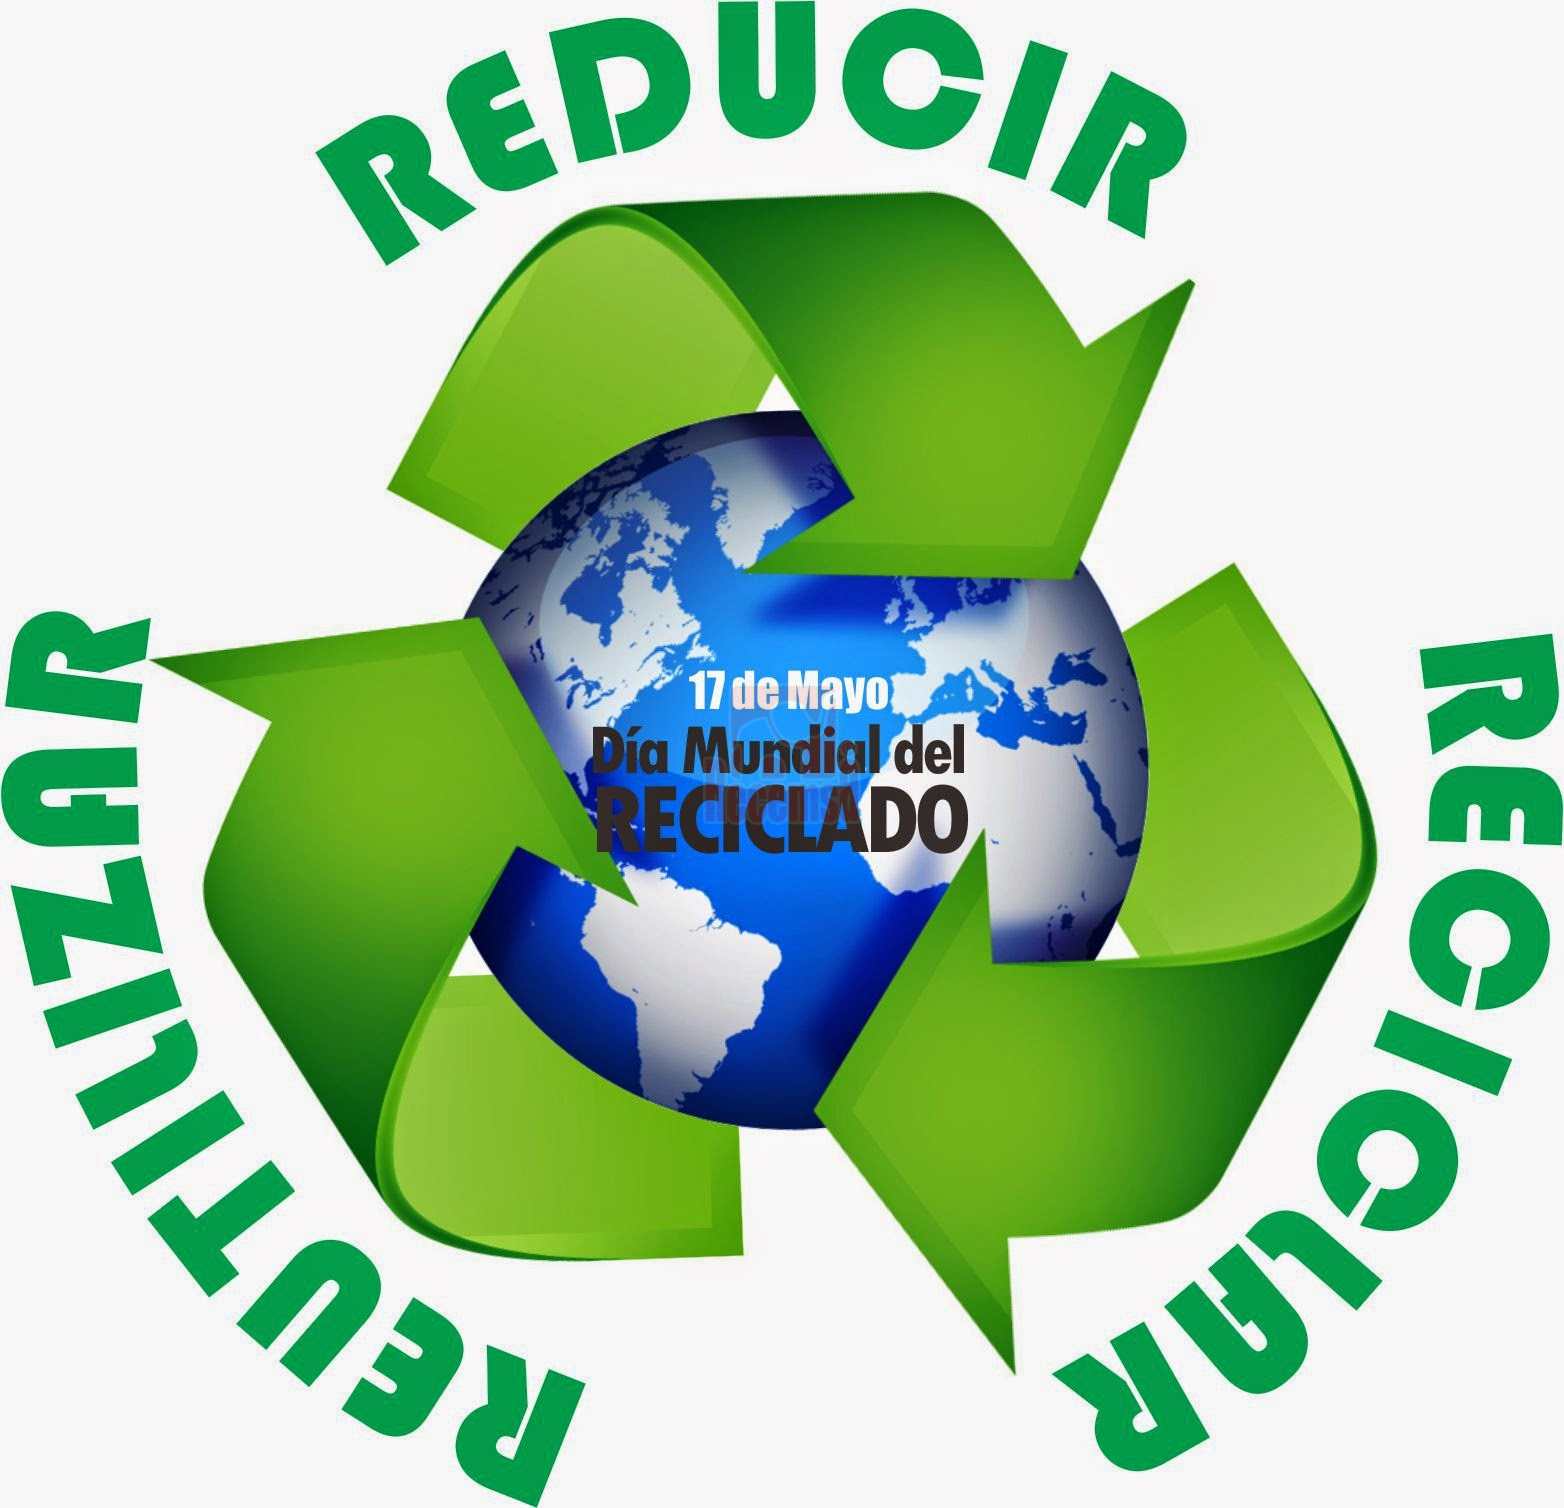 El top 100 imagen que significa el logo del reciclaje